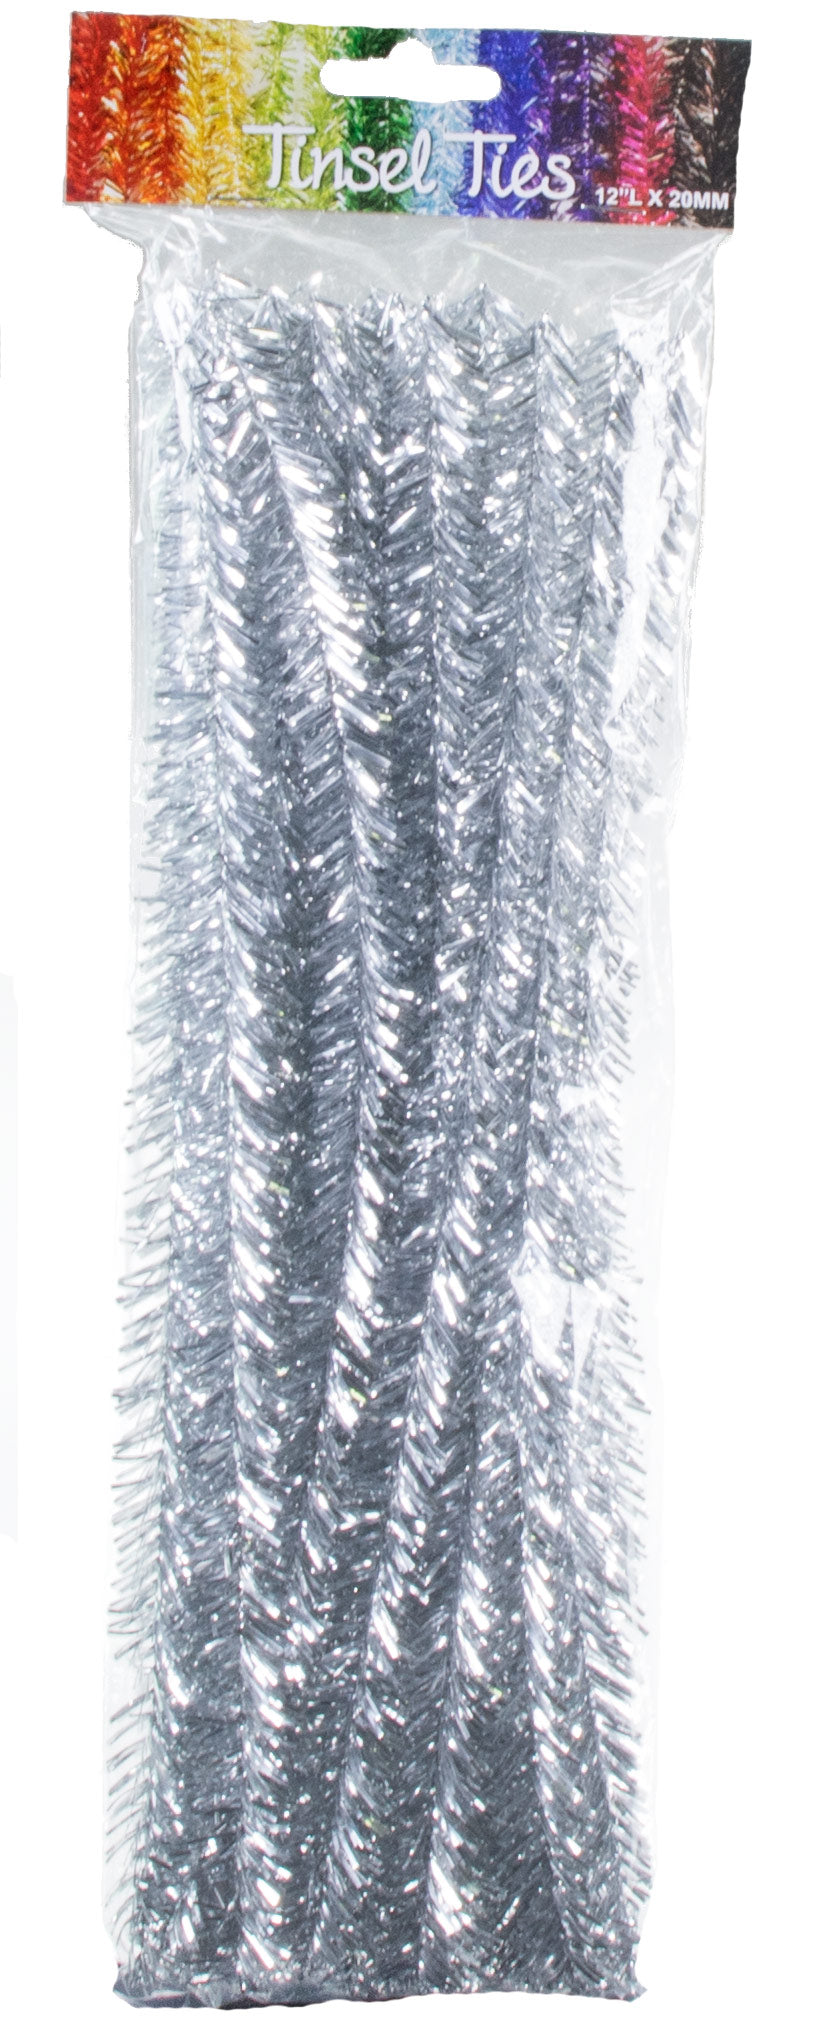 20mm Tinsel Tie Stems: Metallic Silver (25)